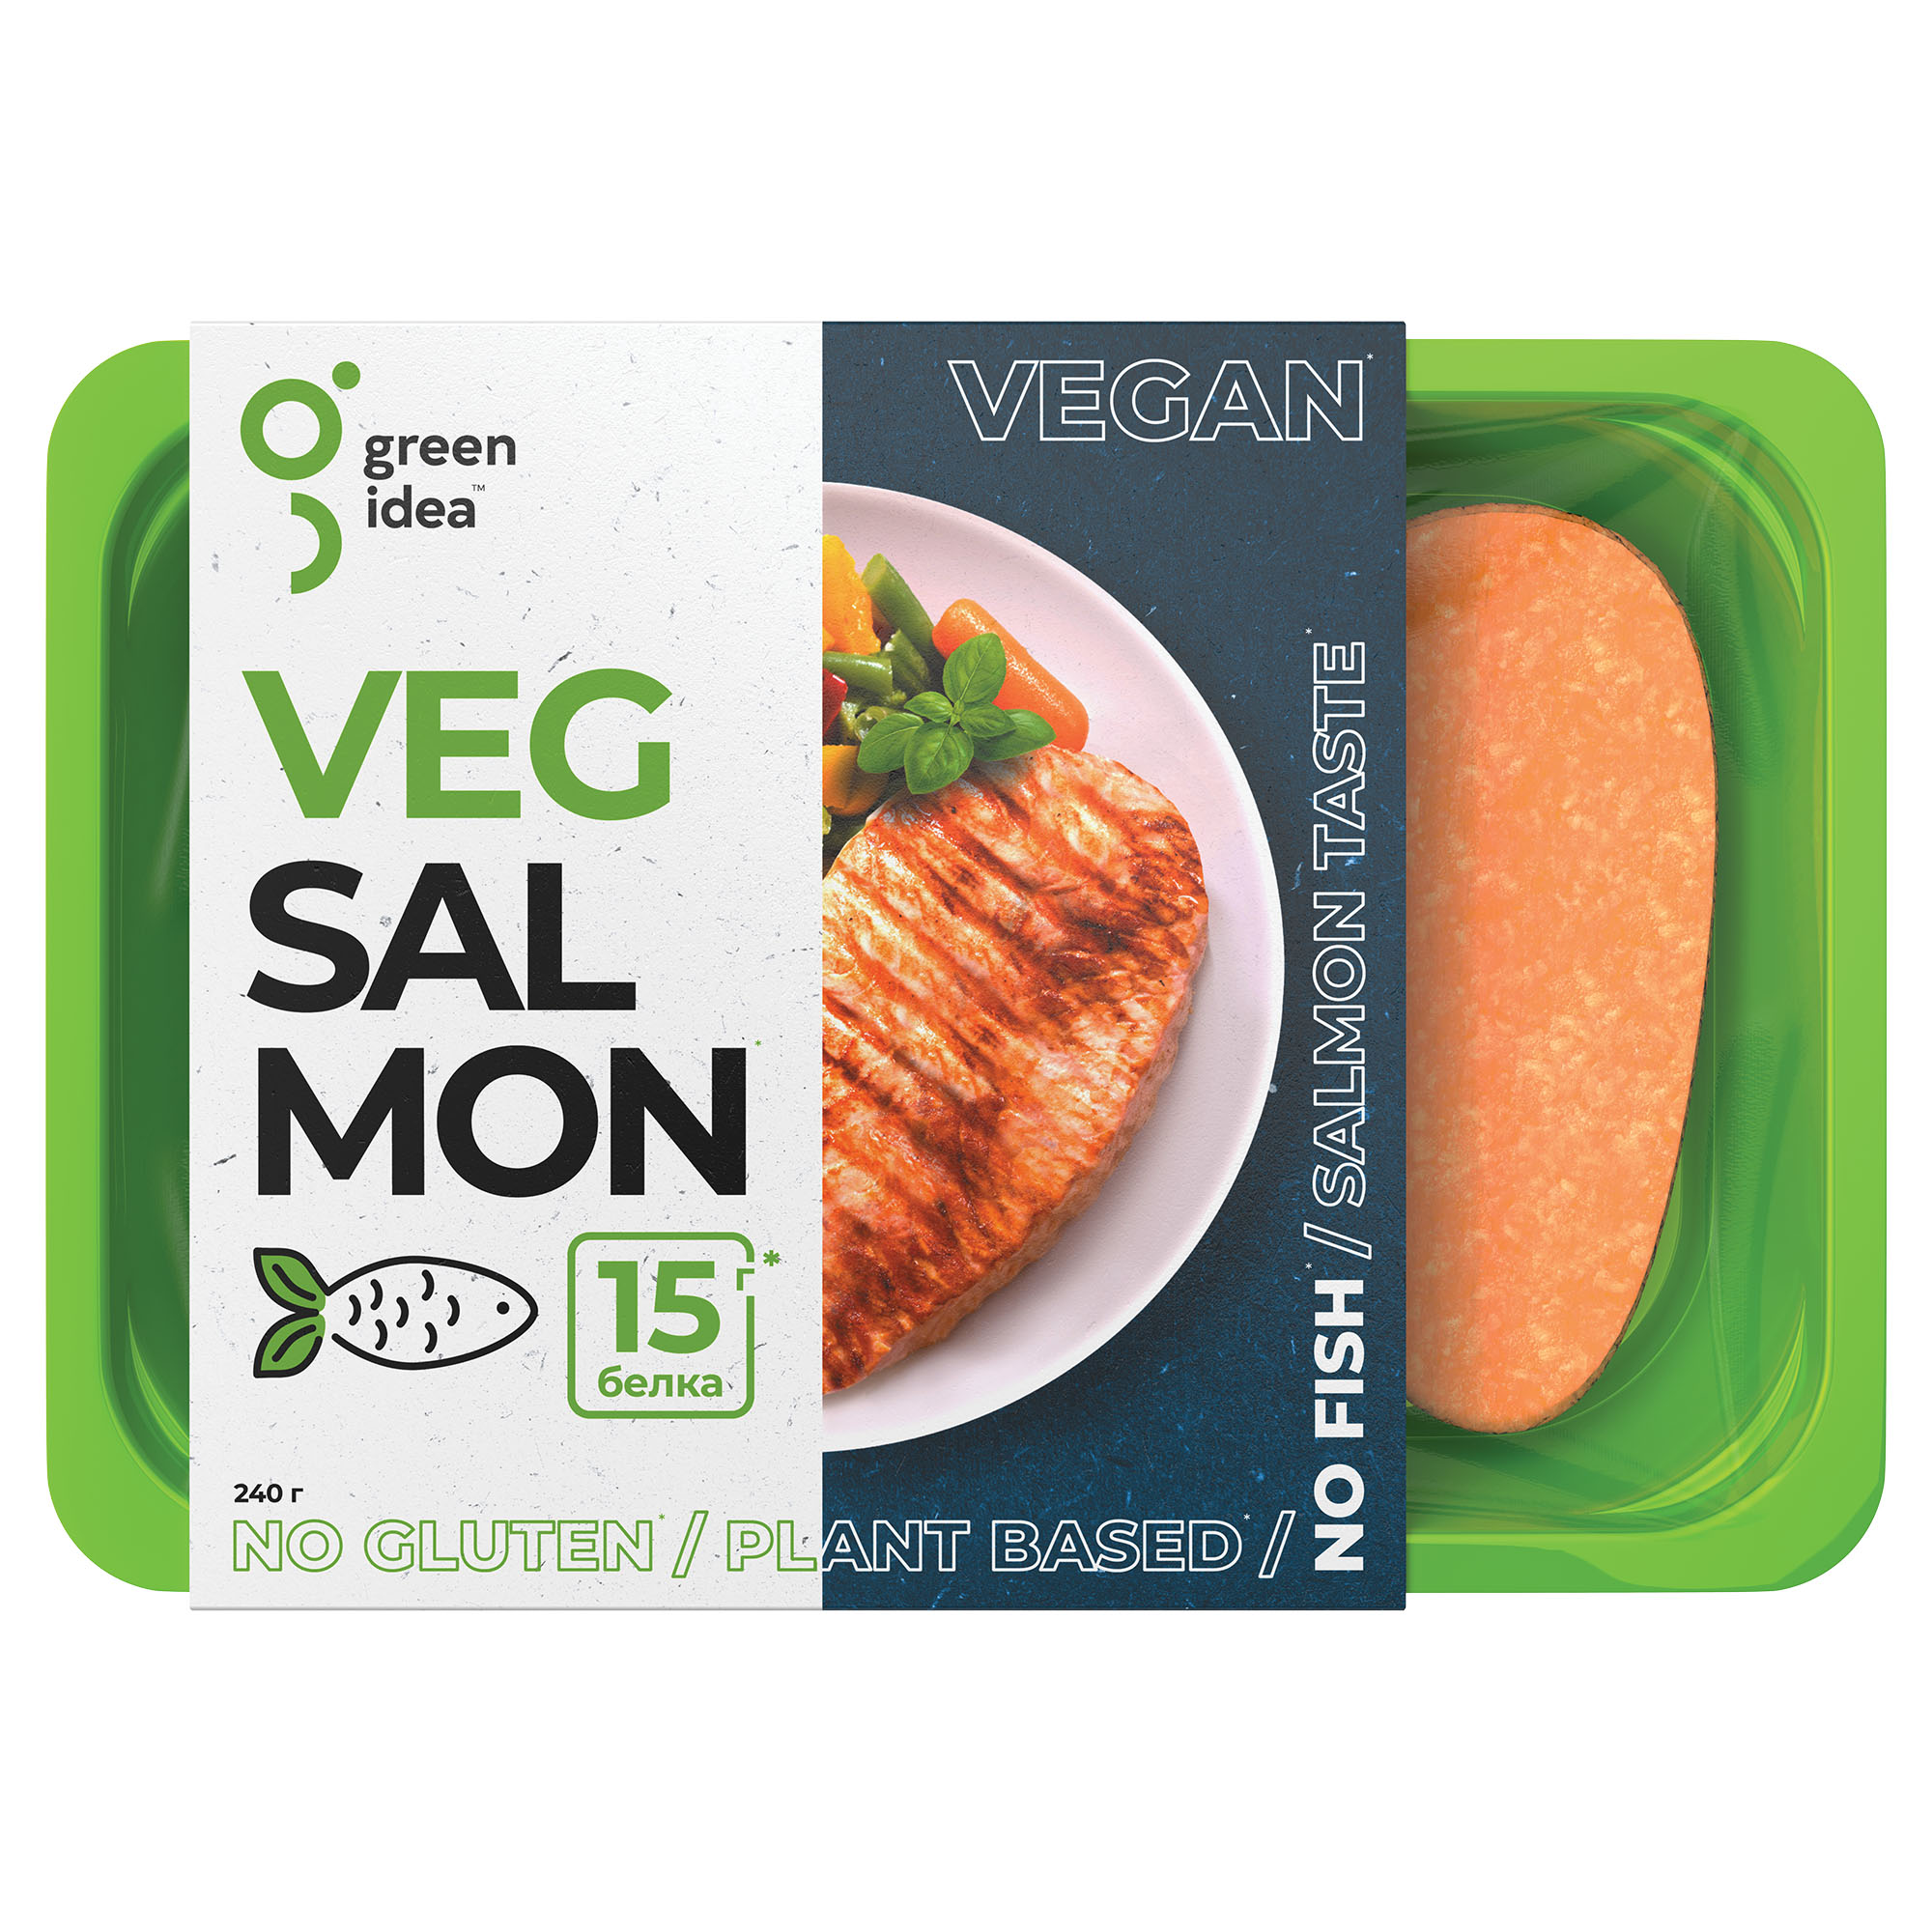 VEG SALMON with salmon flavor, 220 g